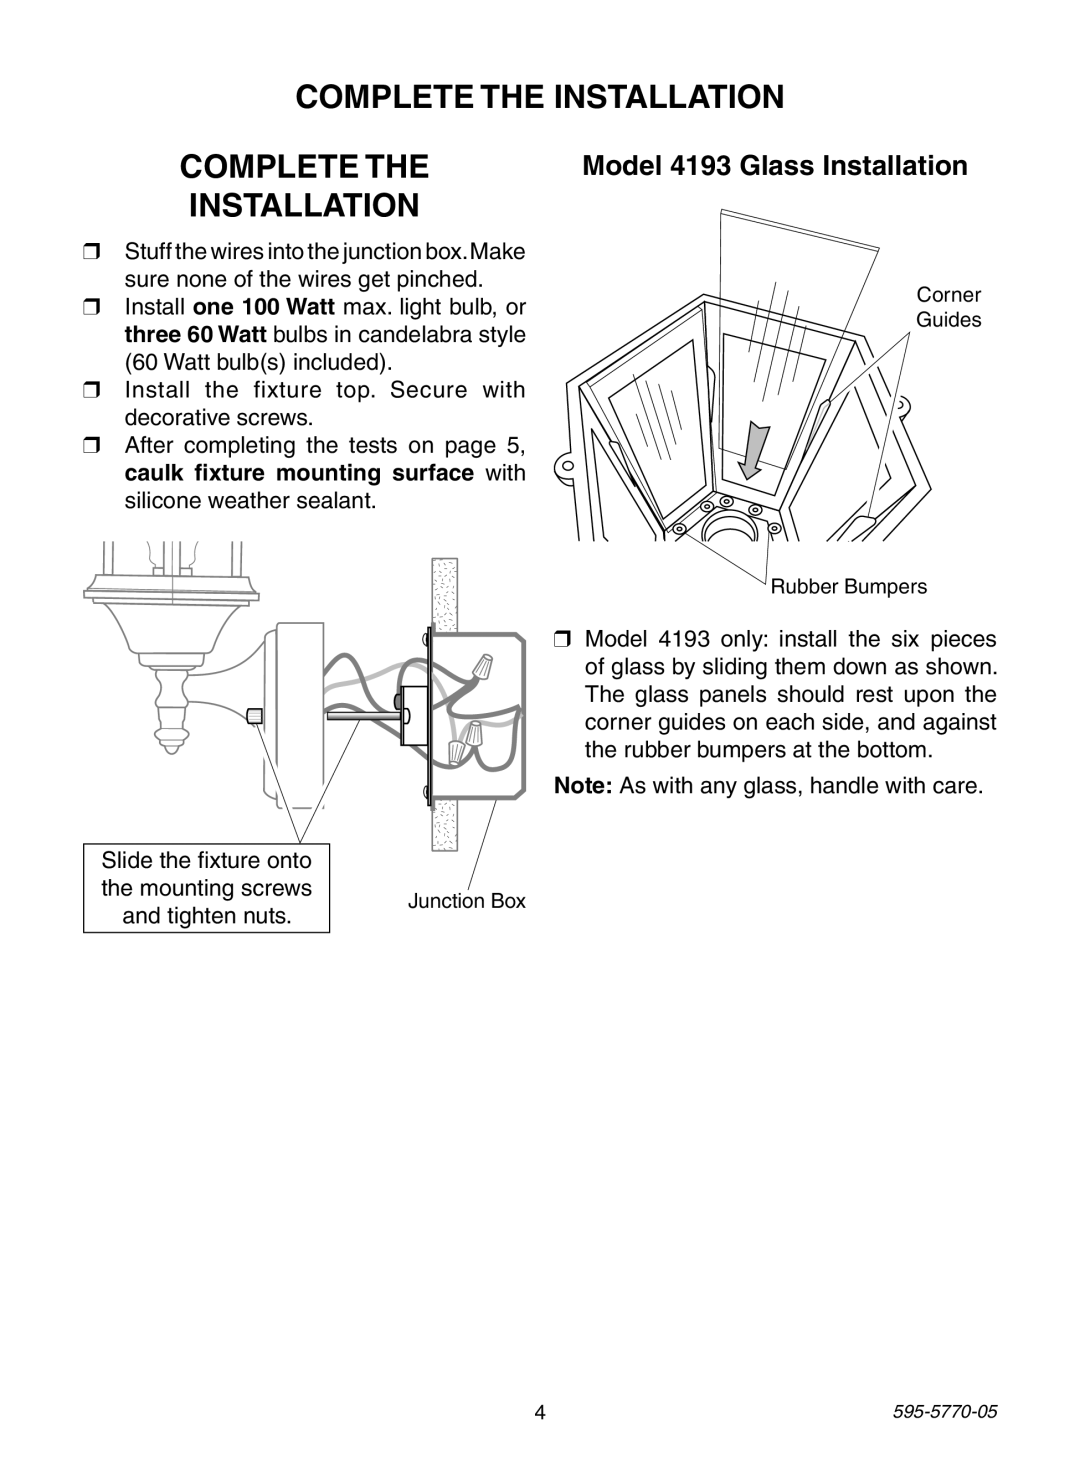 Heath Zenith HB-4190 Series manual Complete The Installation, Model 4193 Glass Installation 